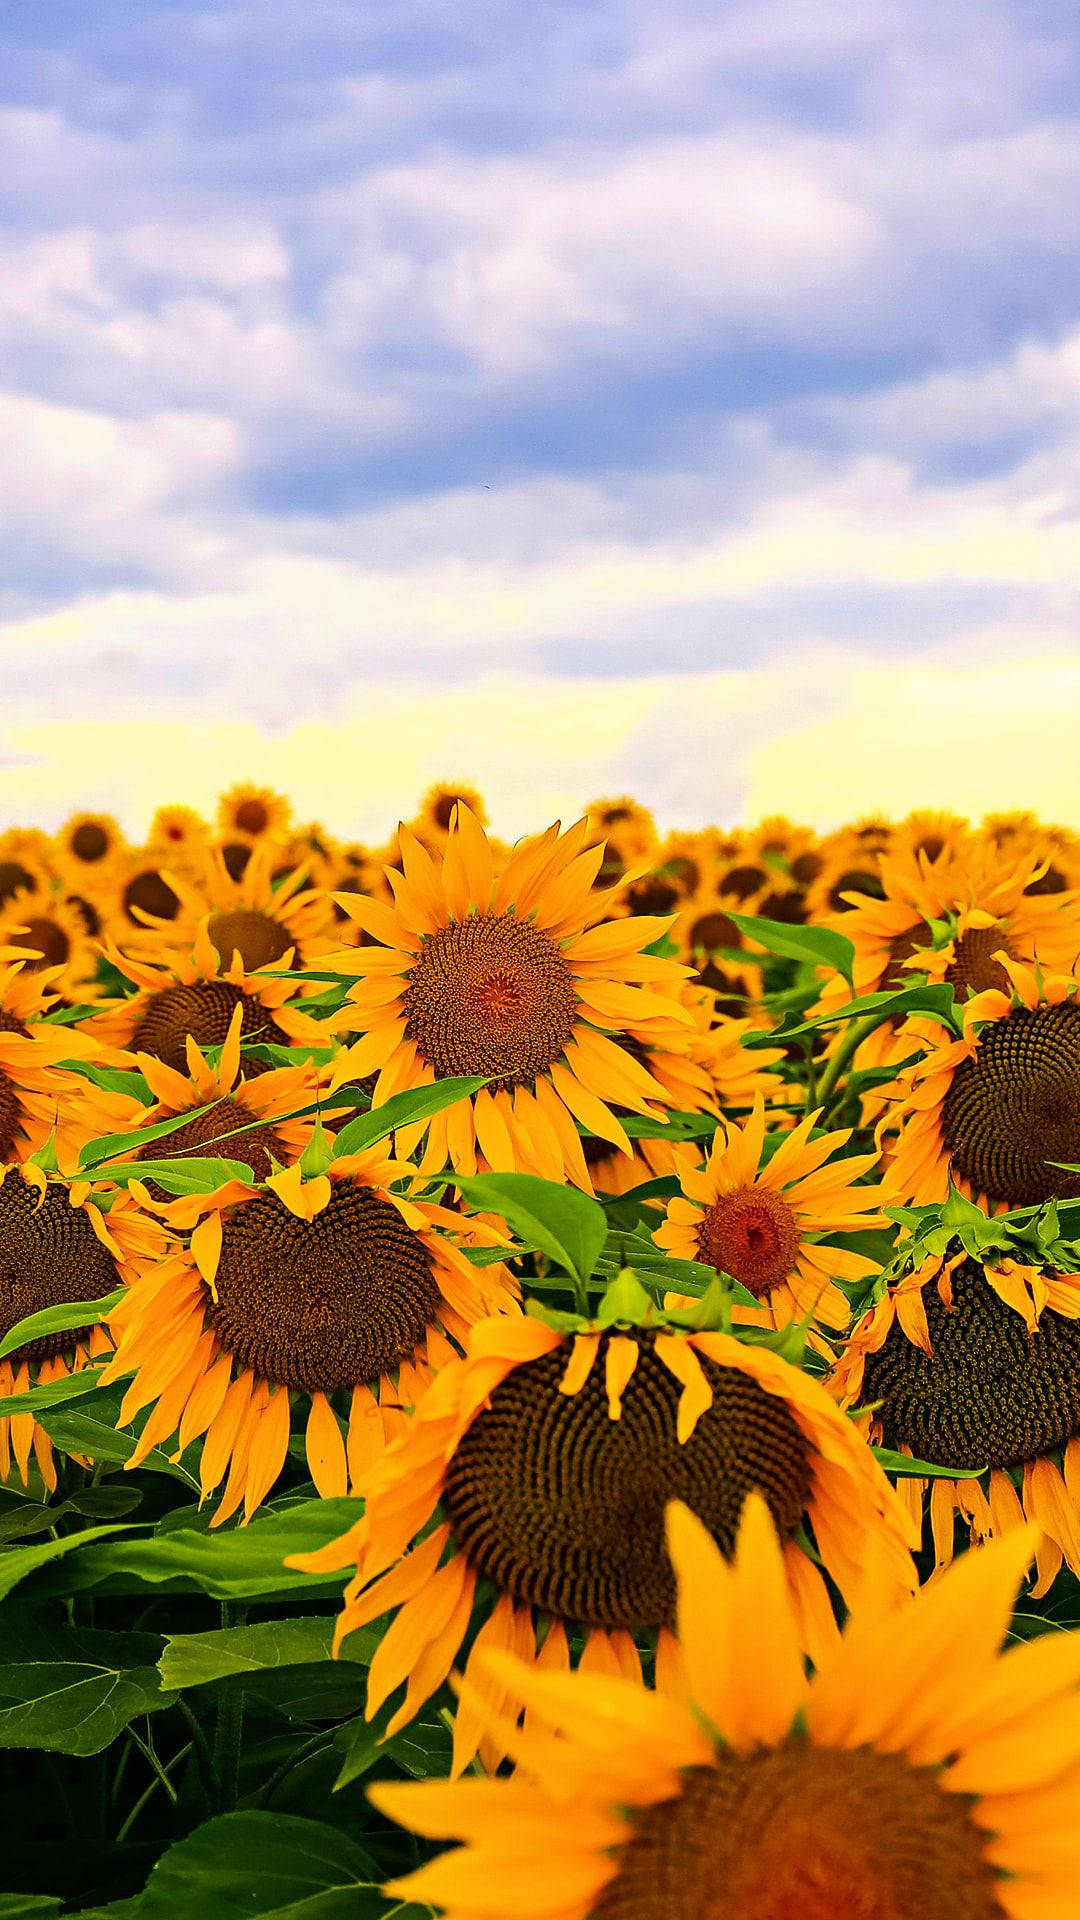 Sunflower Field Bright Skies Wallpaper